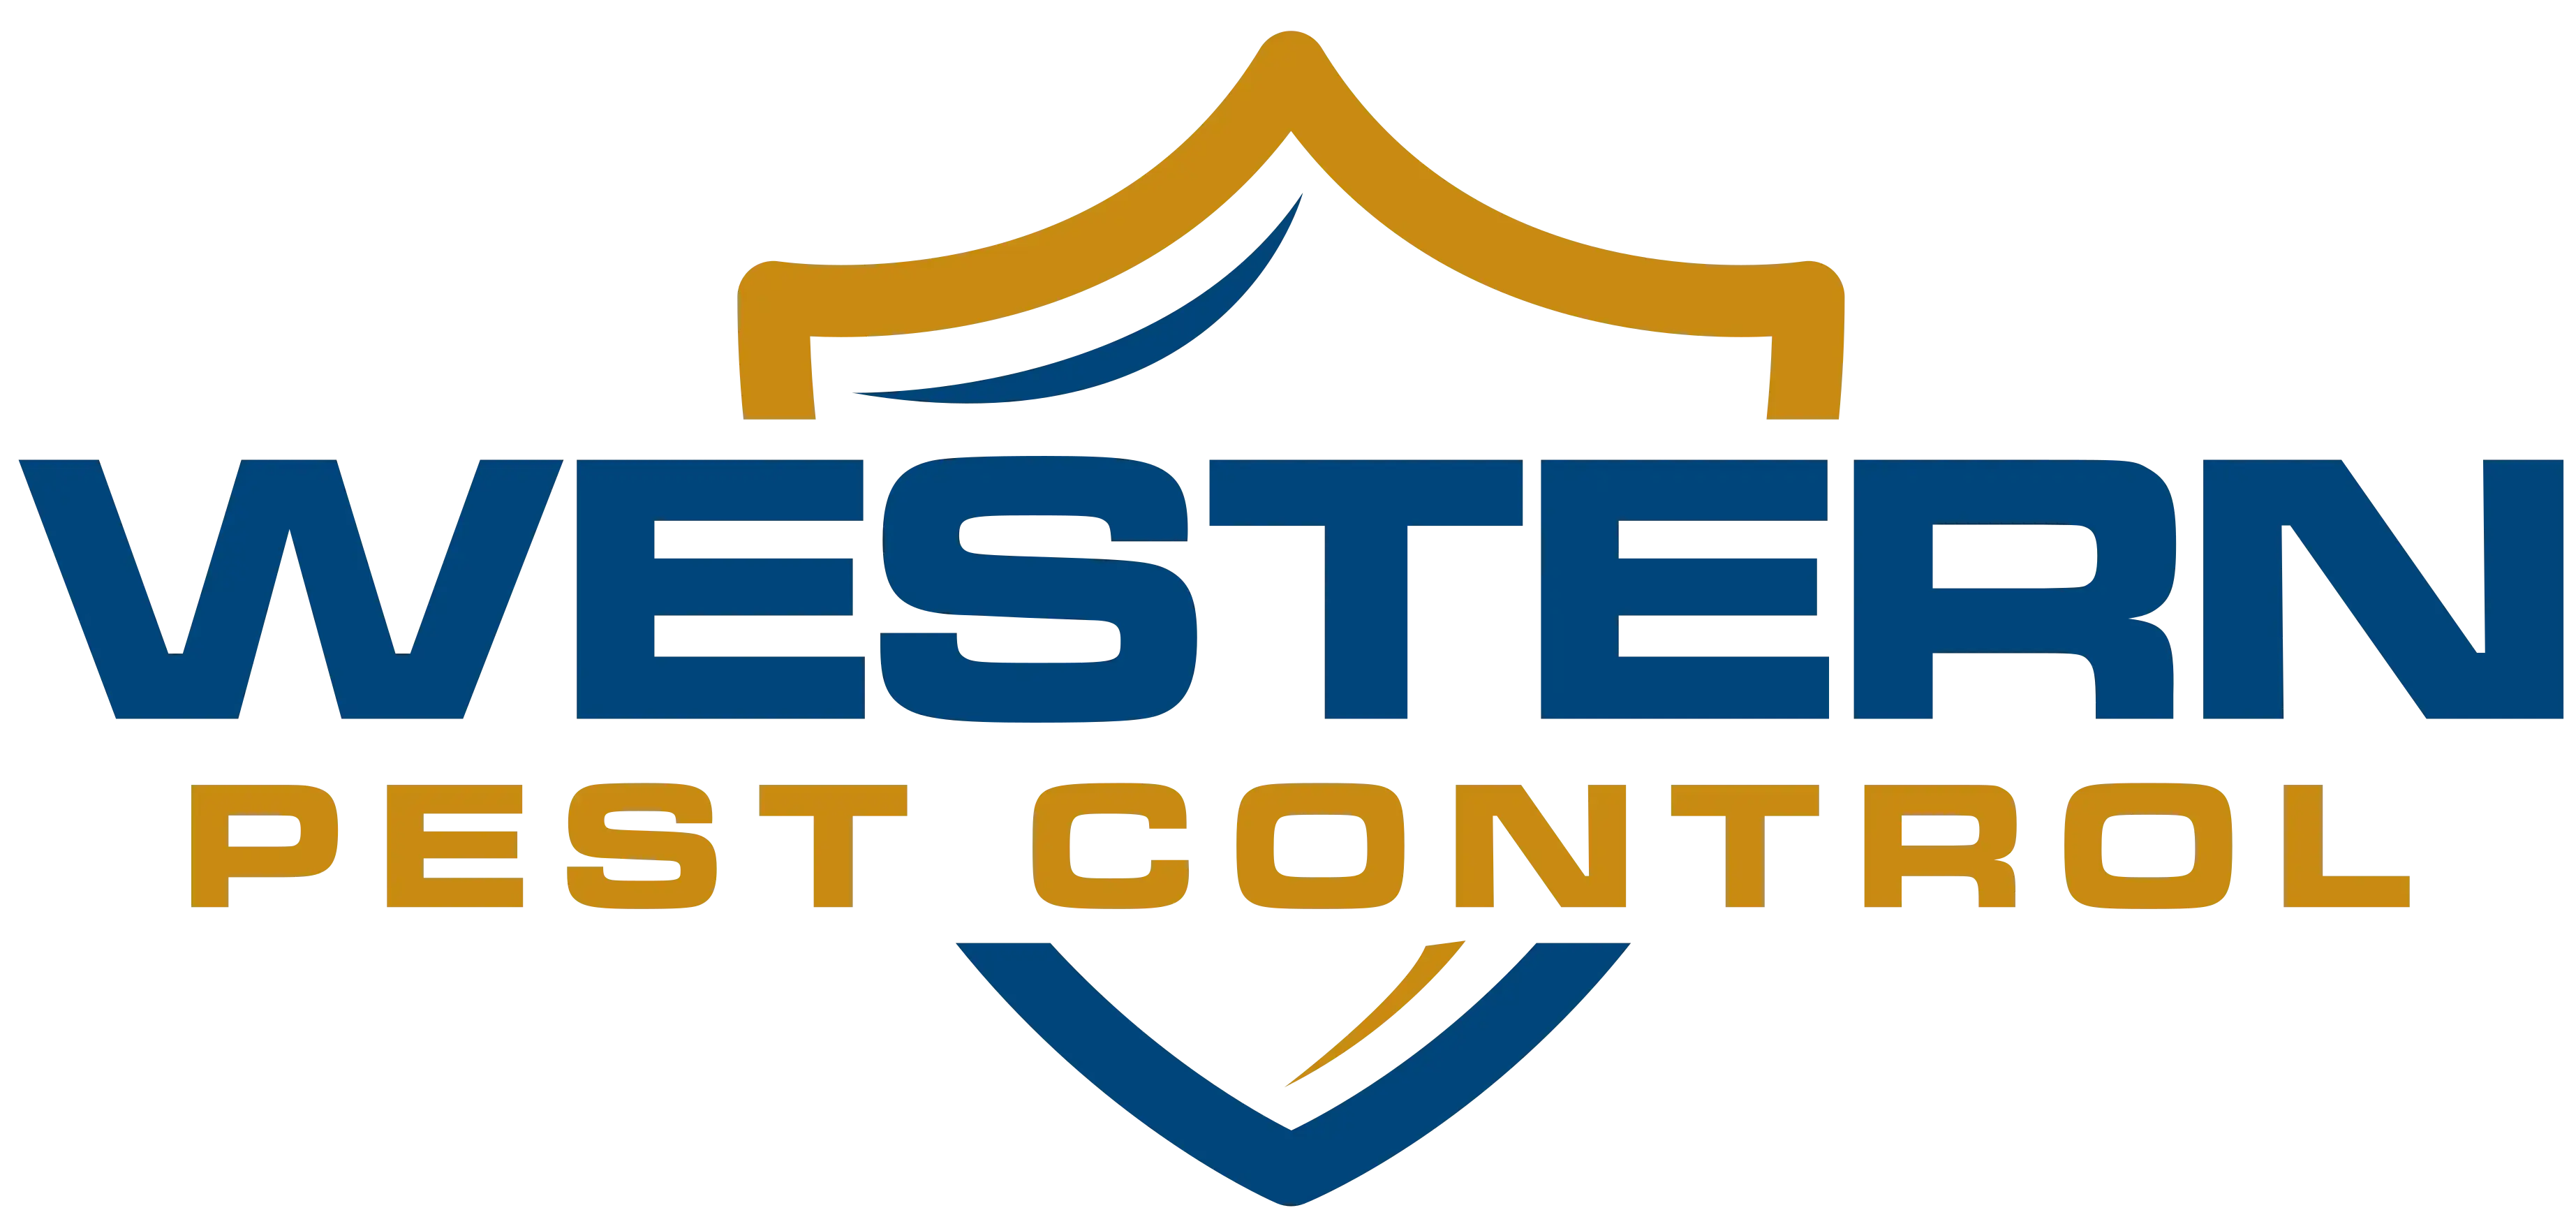 Western Pest Control